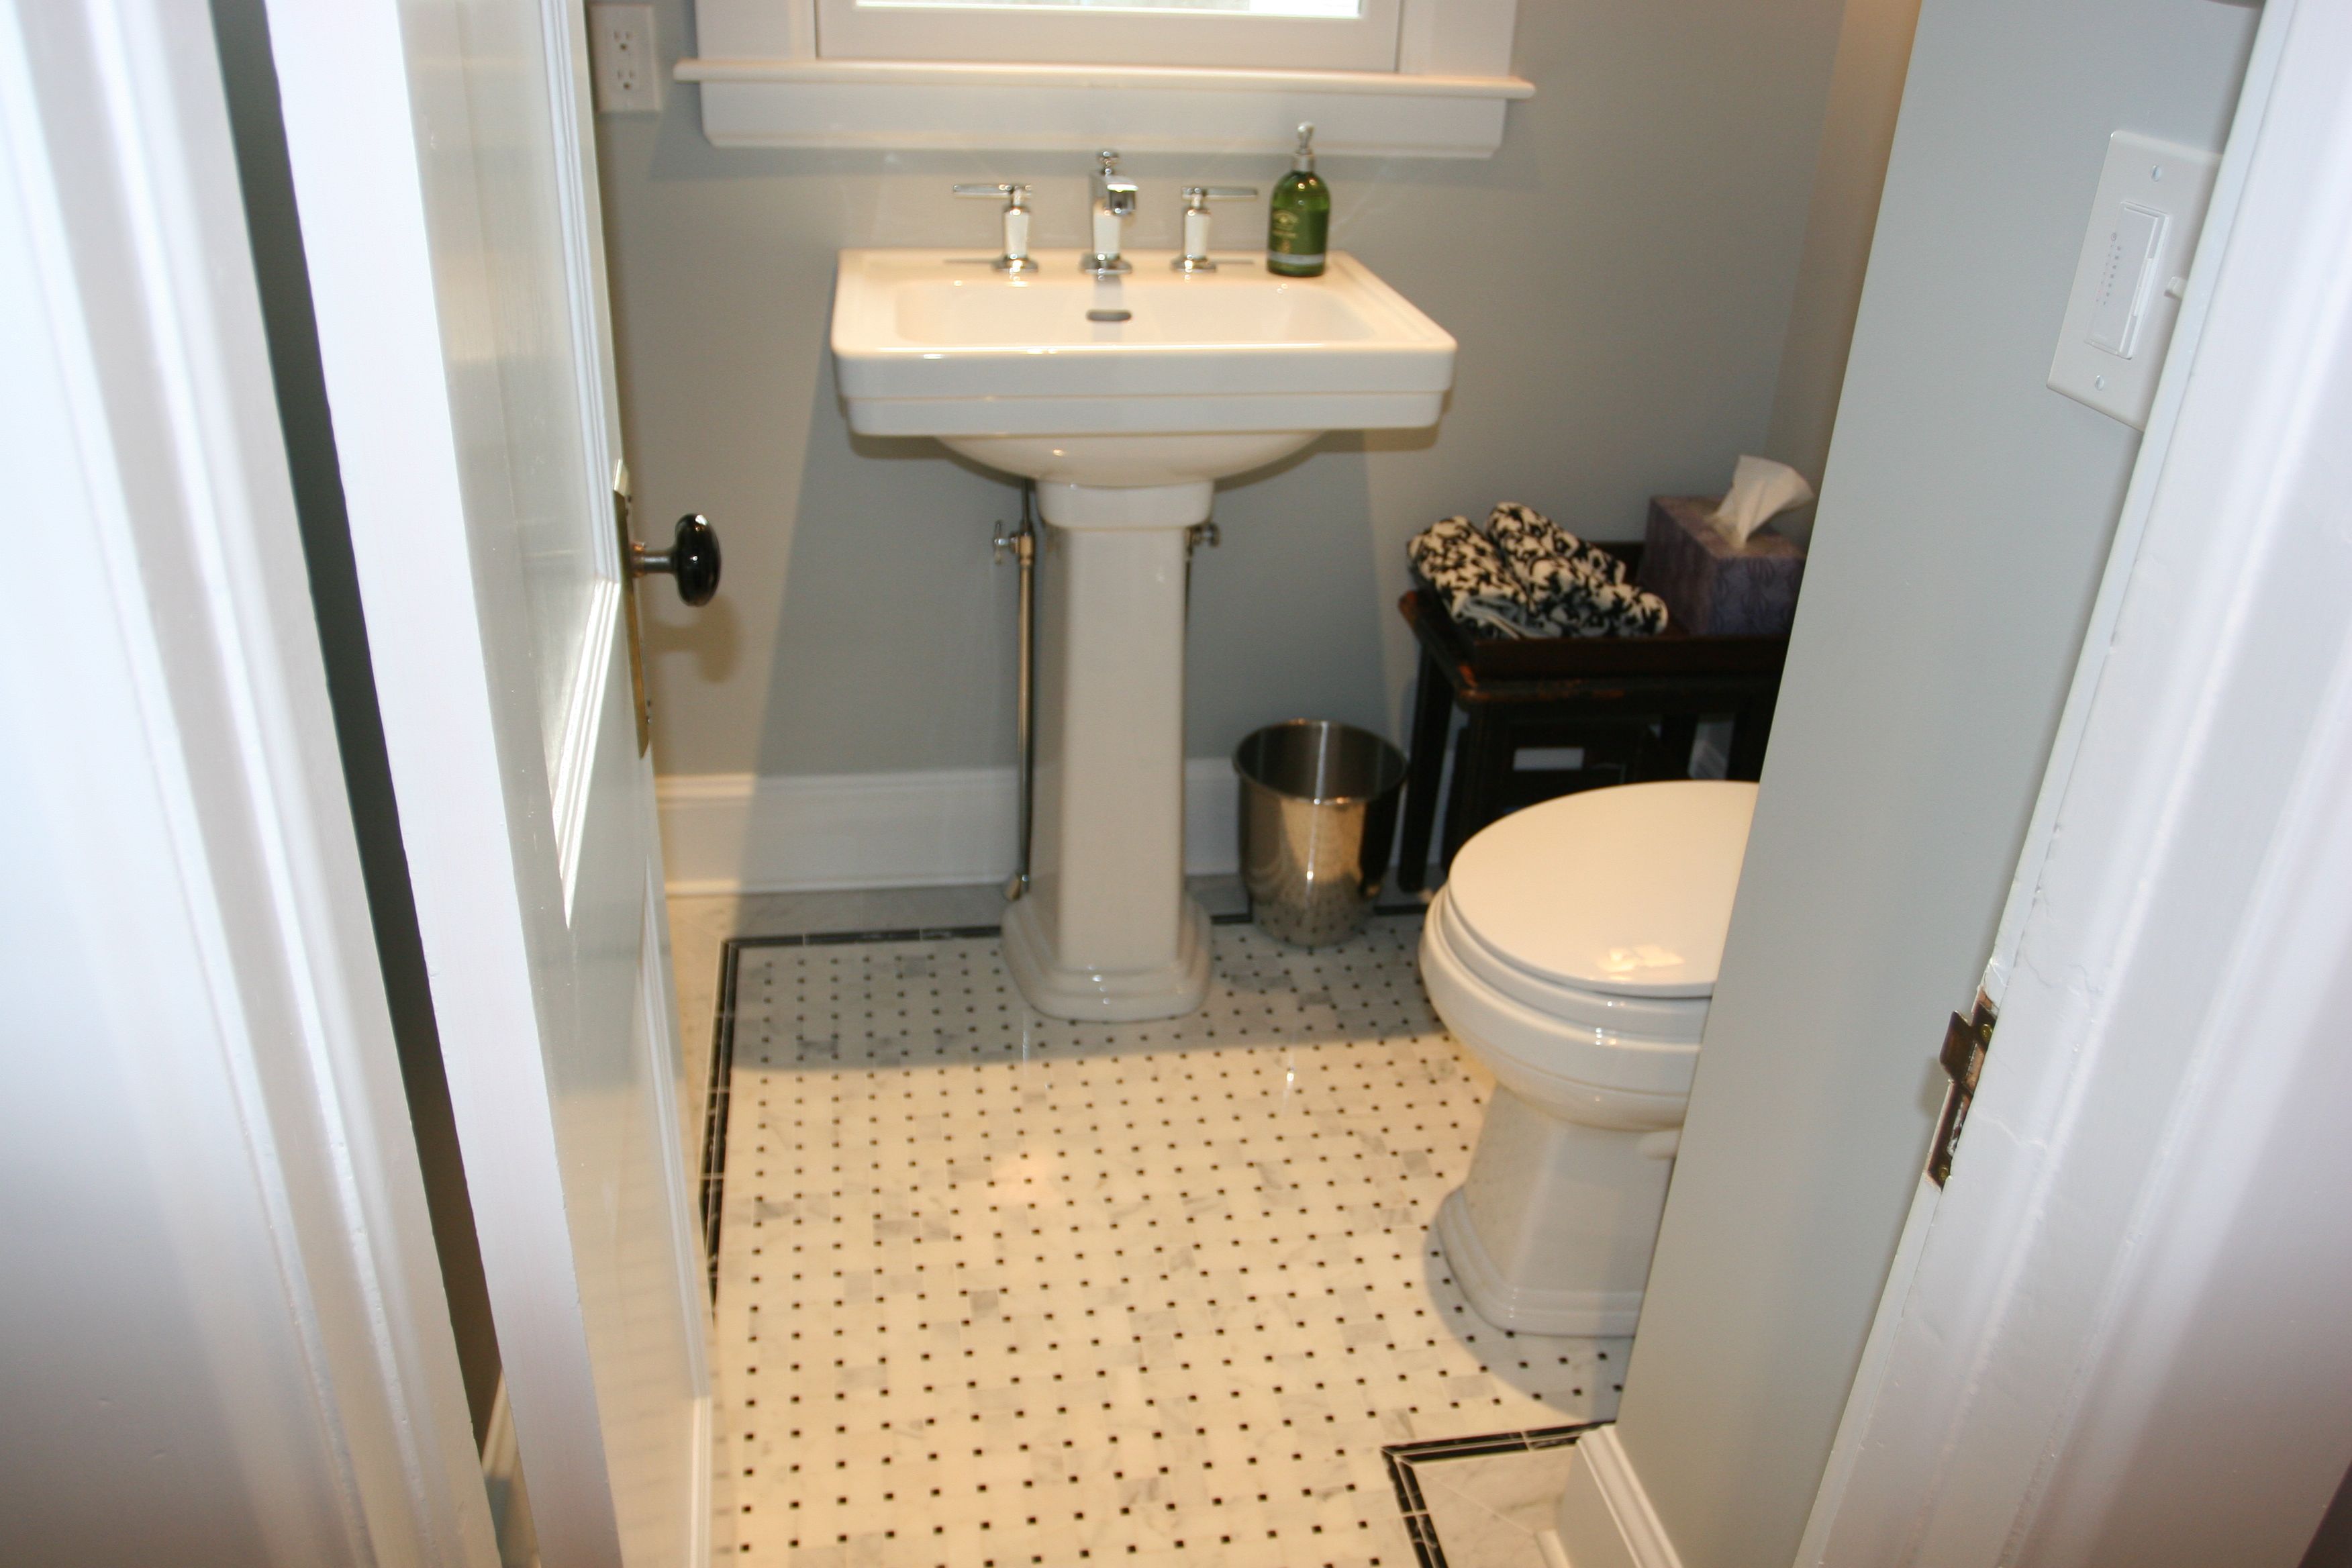 Toto Promenade toilet and sink; Kohler Margeaux faucet. Marble tile basketweave with marble surround. Floor heat by NuHeat.